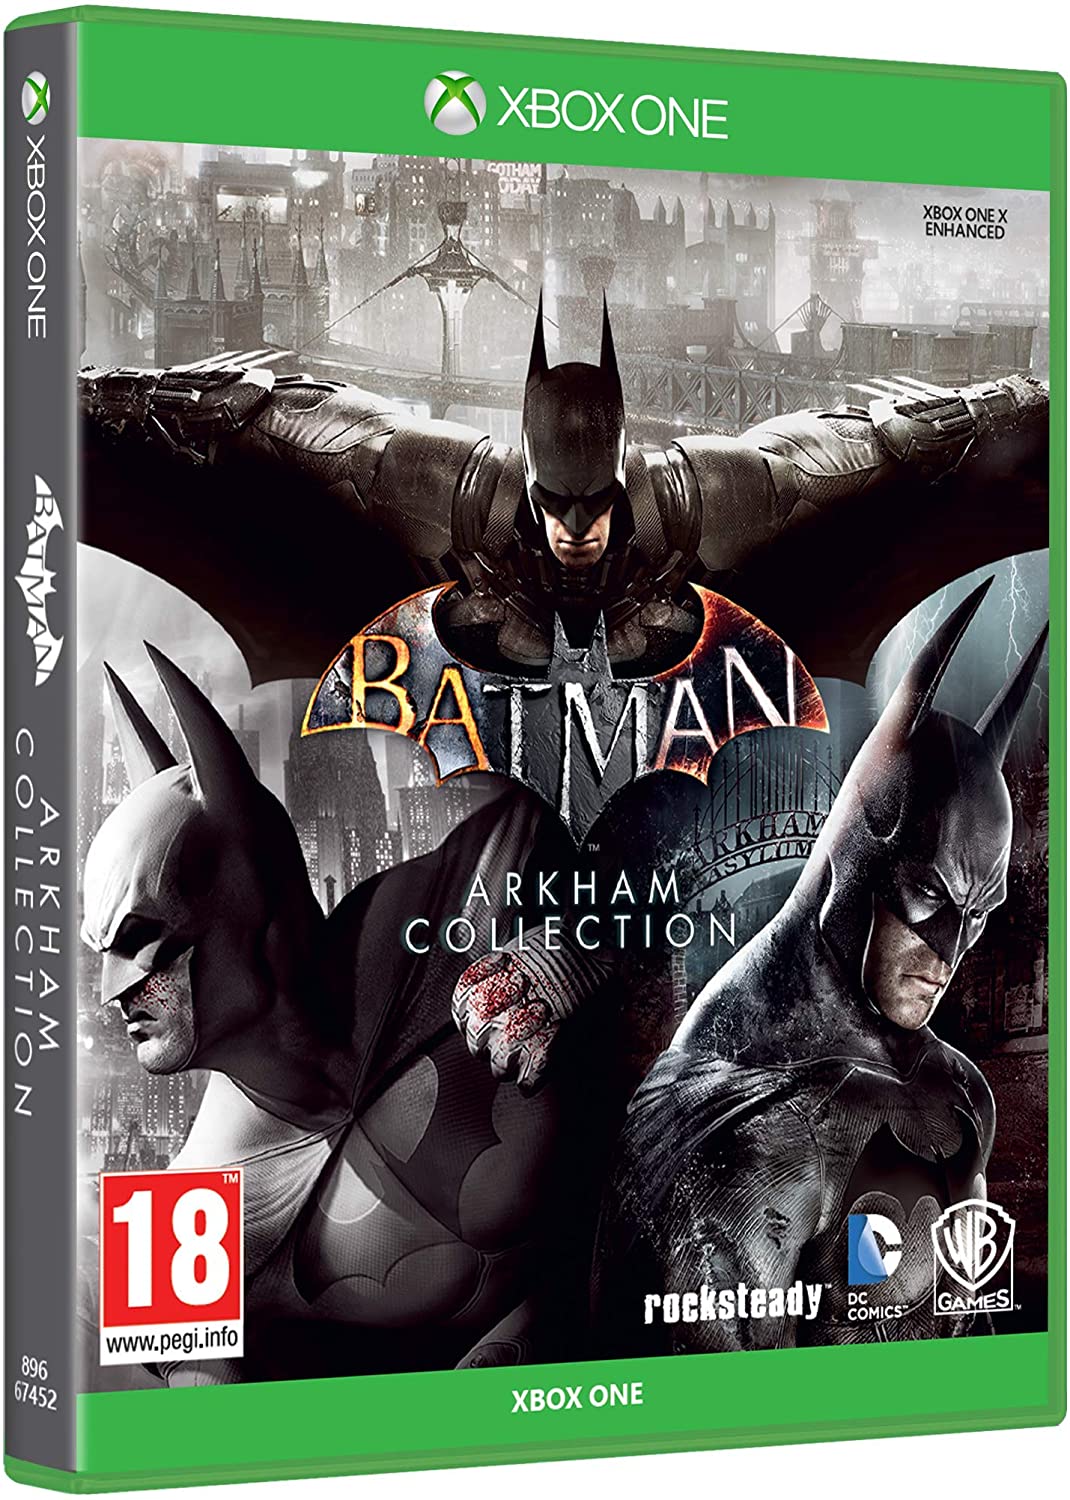 Batman Arkham Collection Video Game (Xbox One)